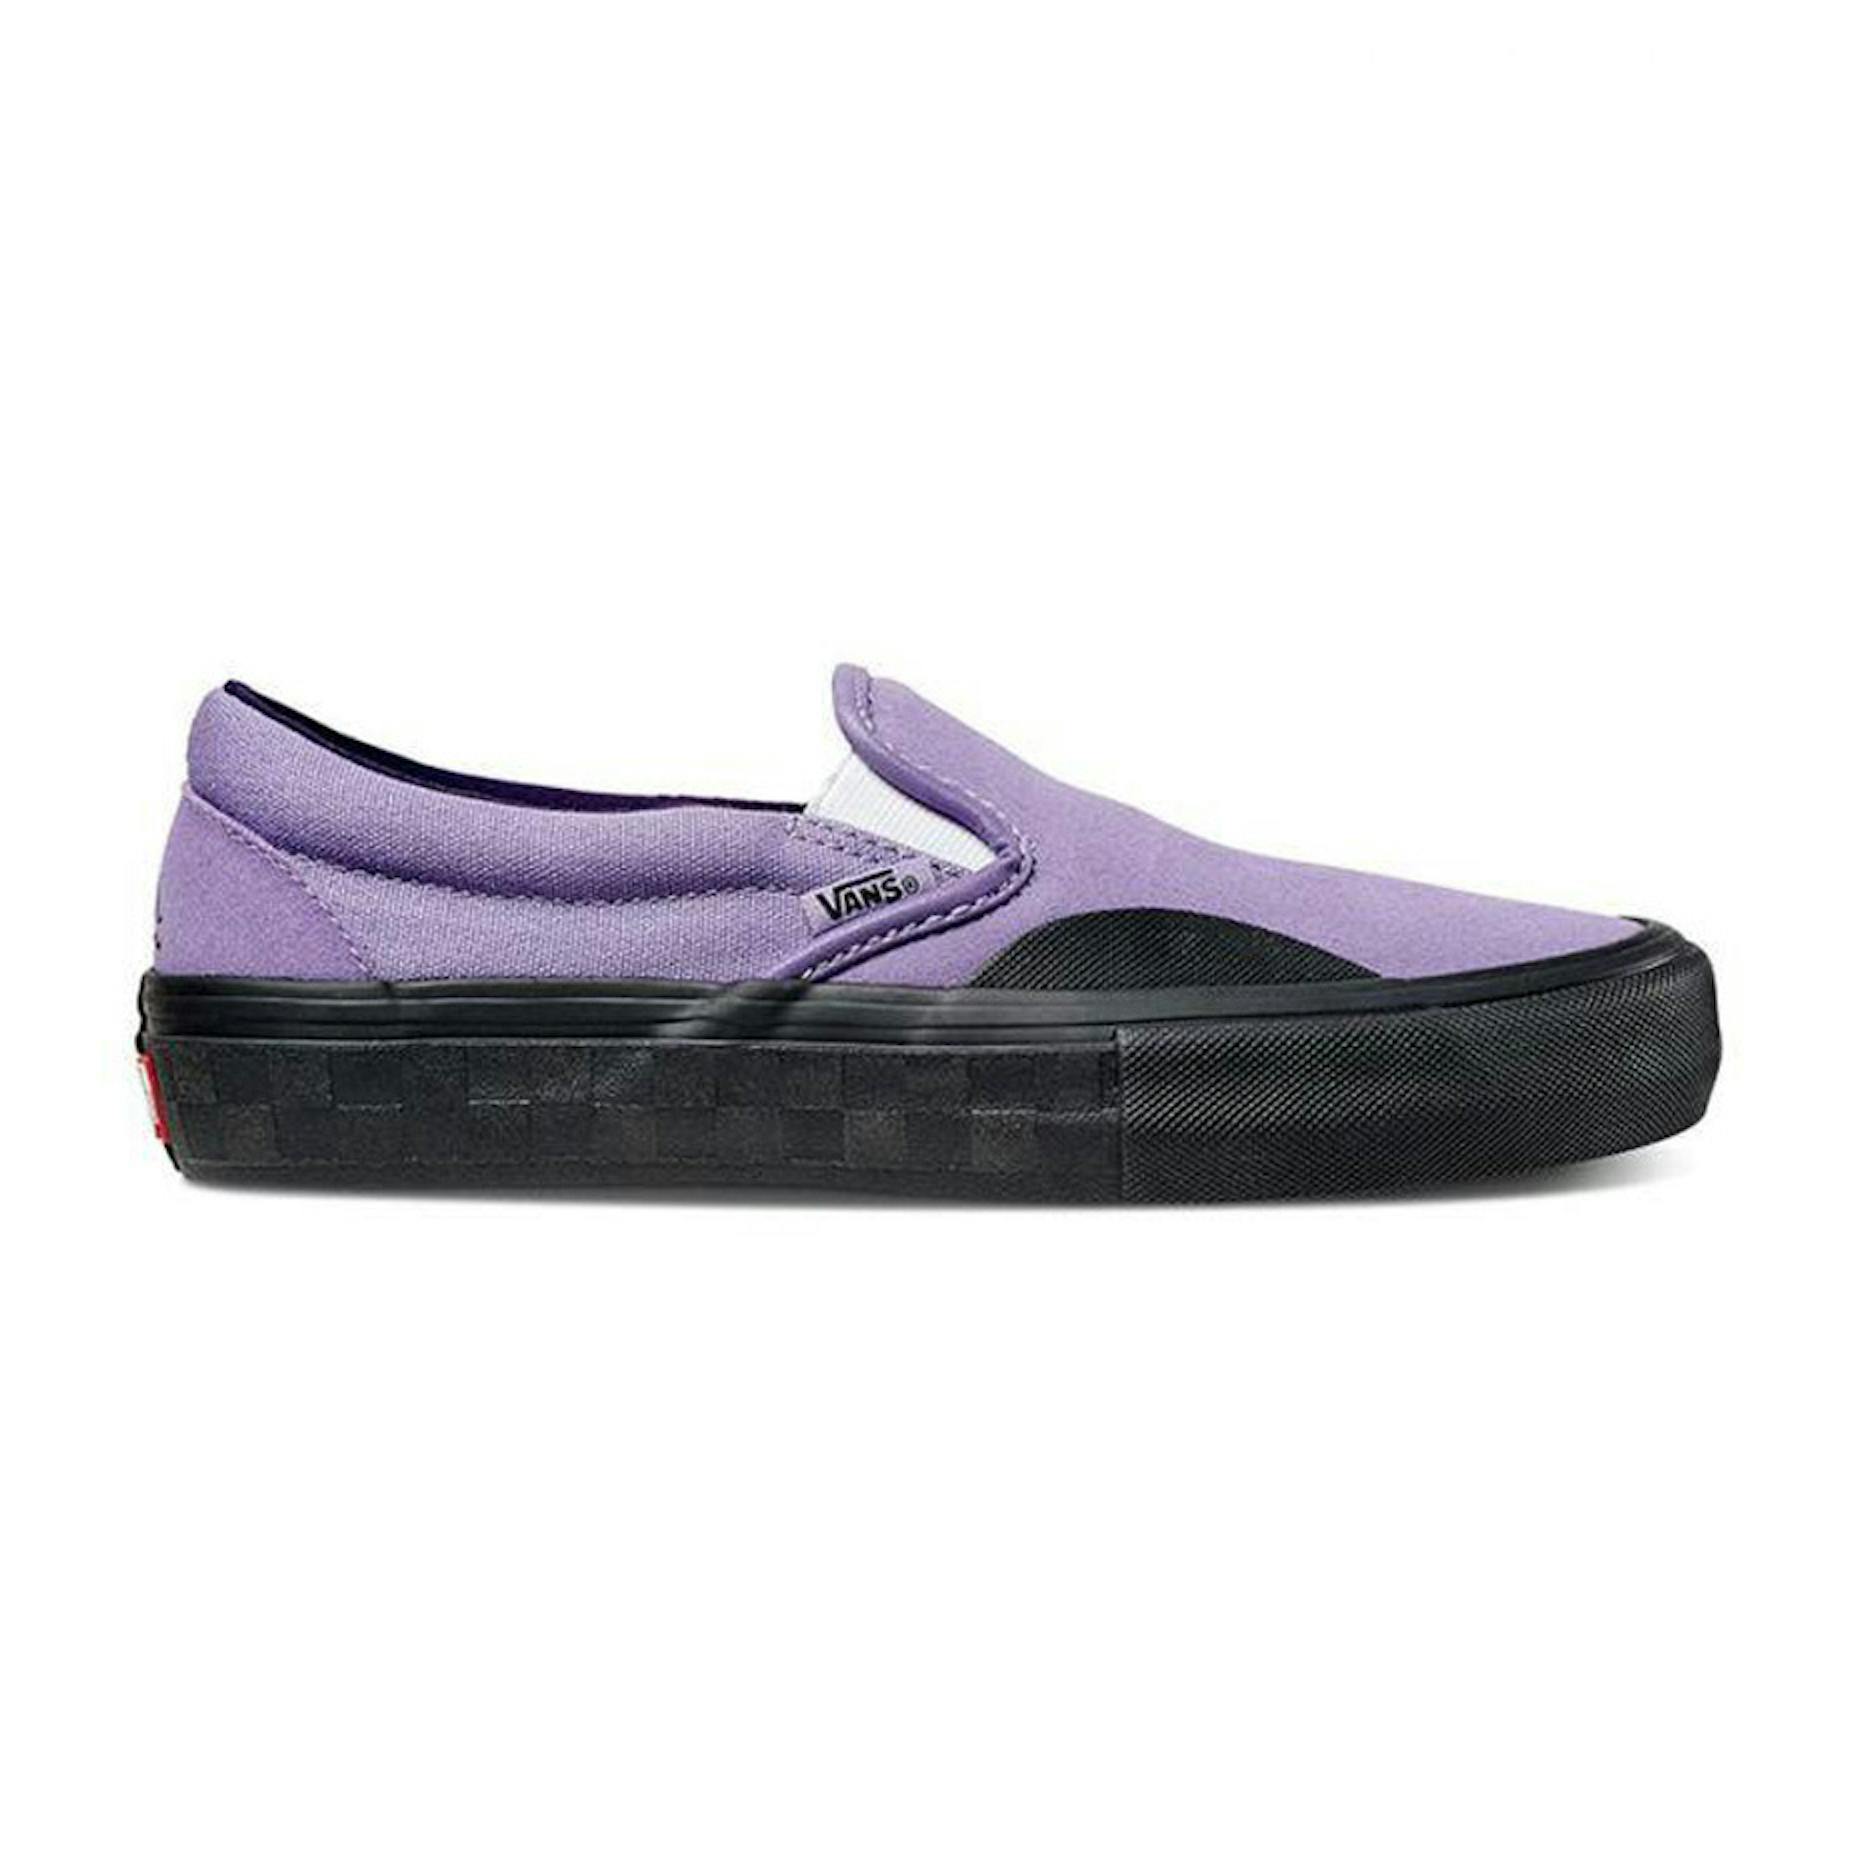 Vans Slip Skate Shoe - Lizzie Armanto | BOARDWORLD Store